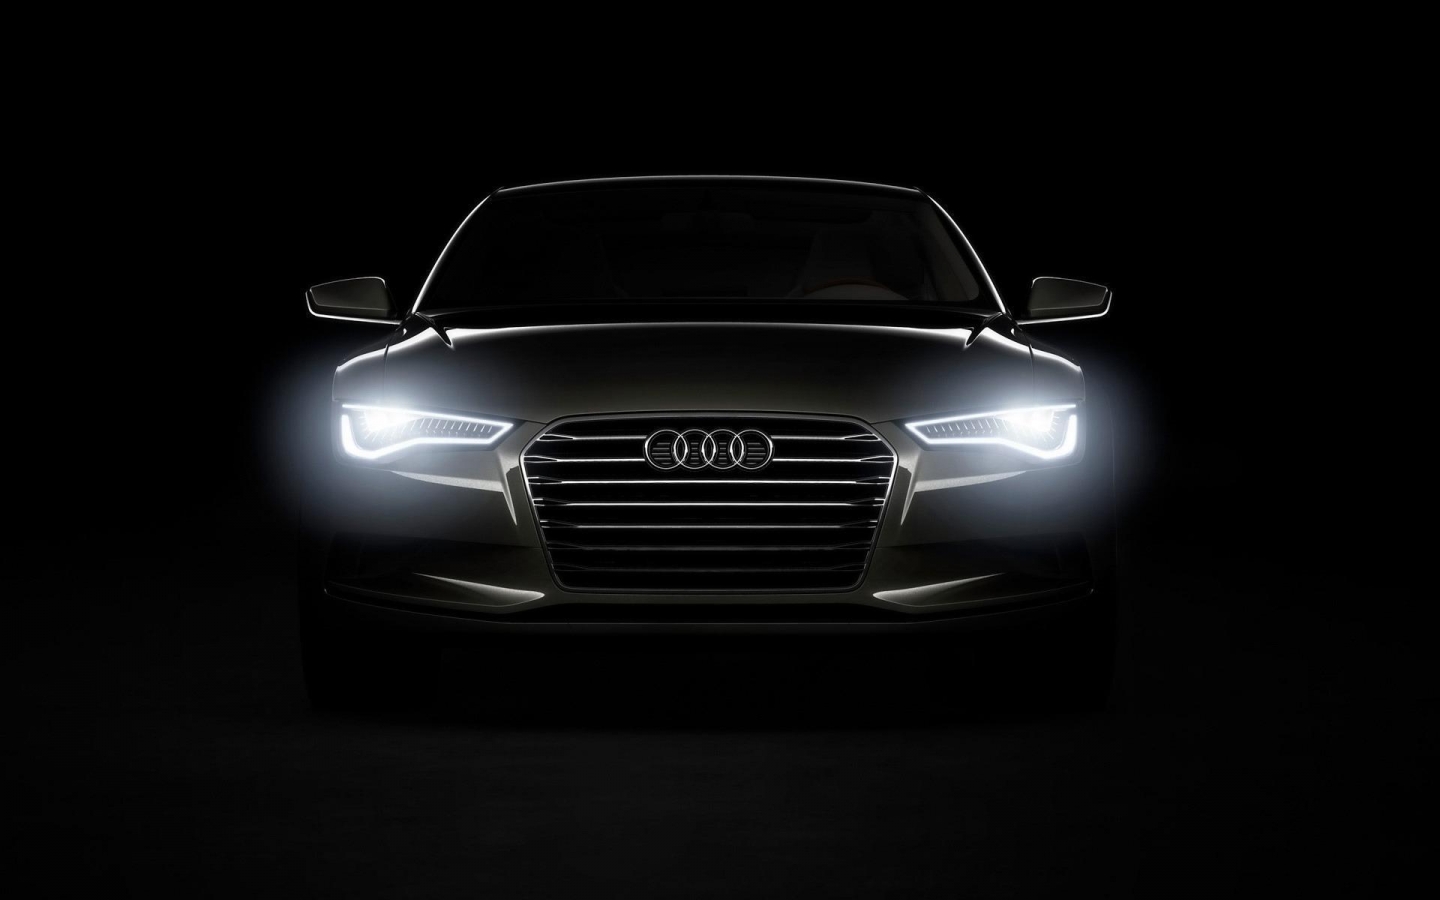 Audi A7 Headlights for 1440 x 900 widescreen resolution